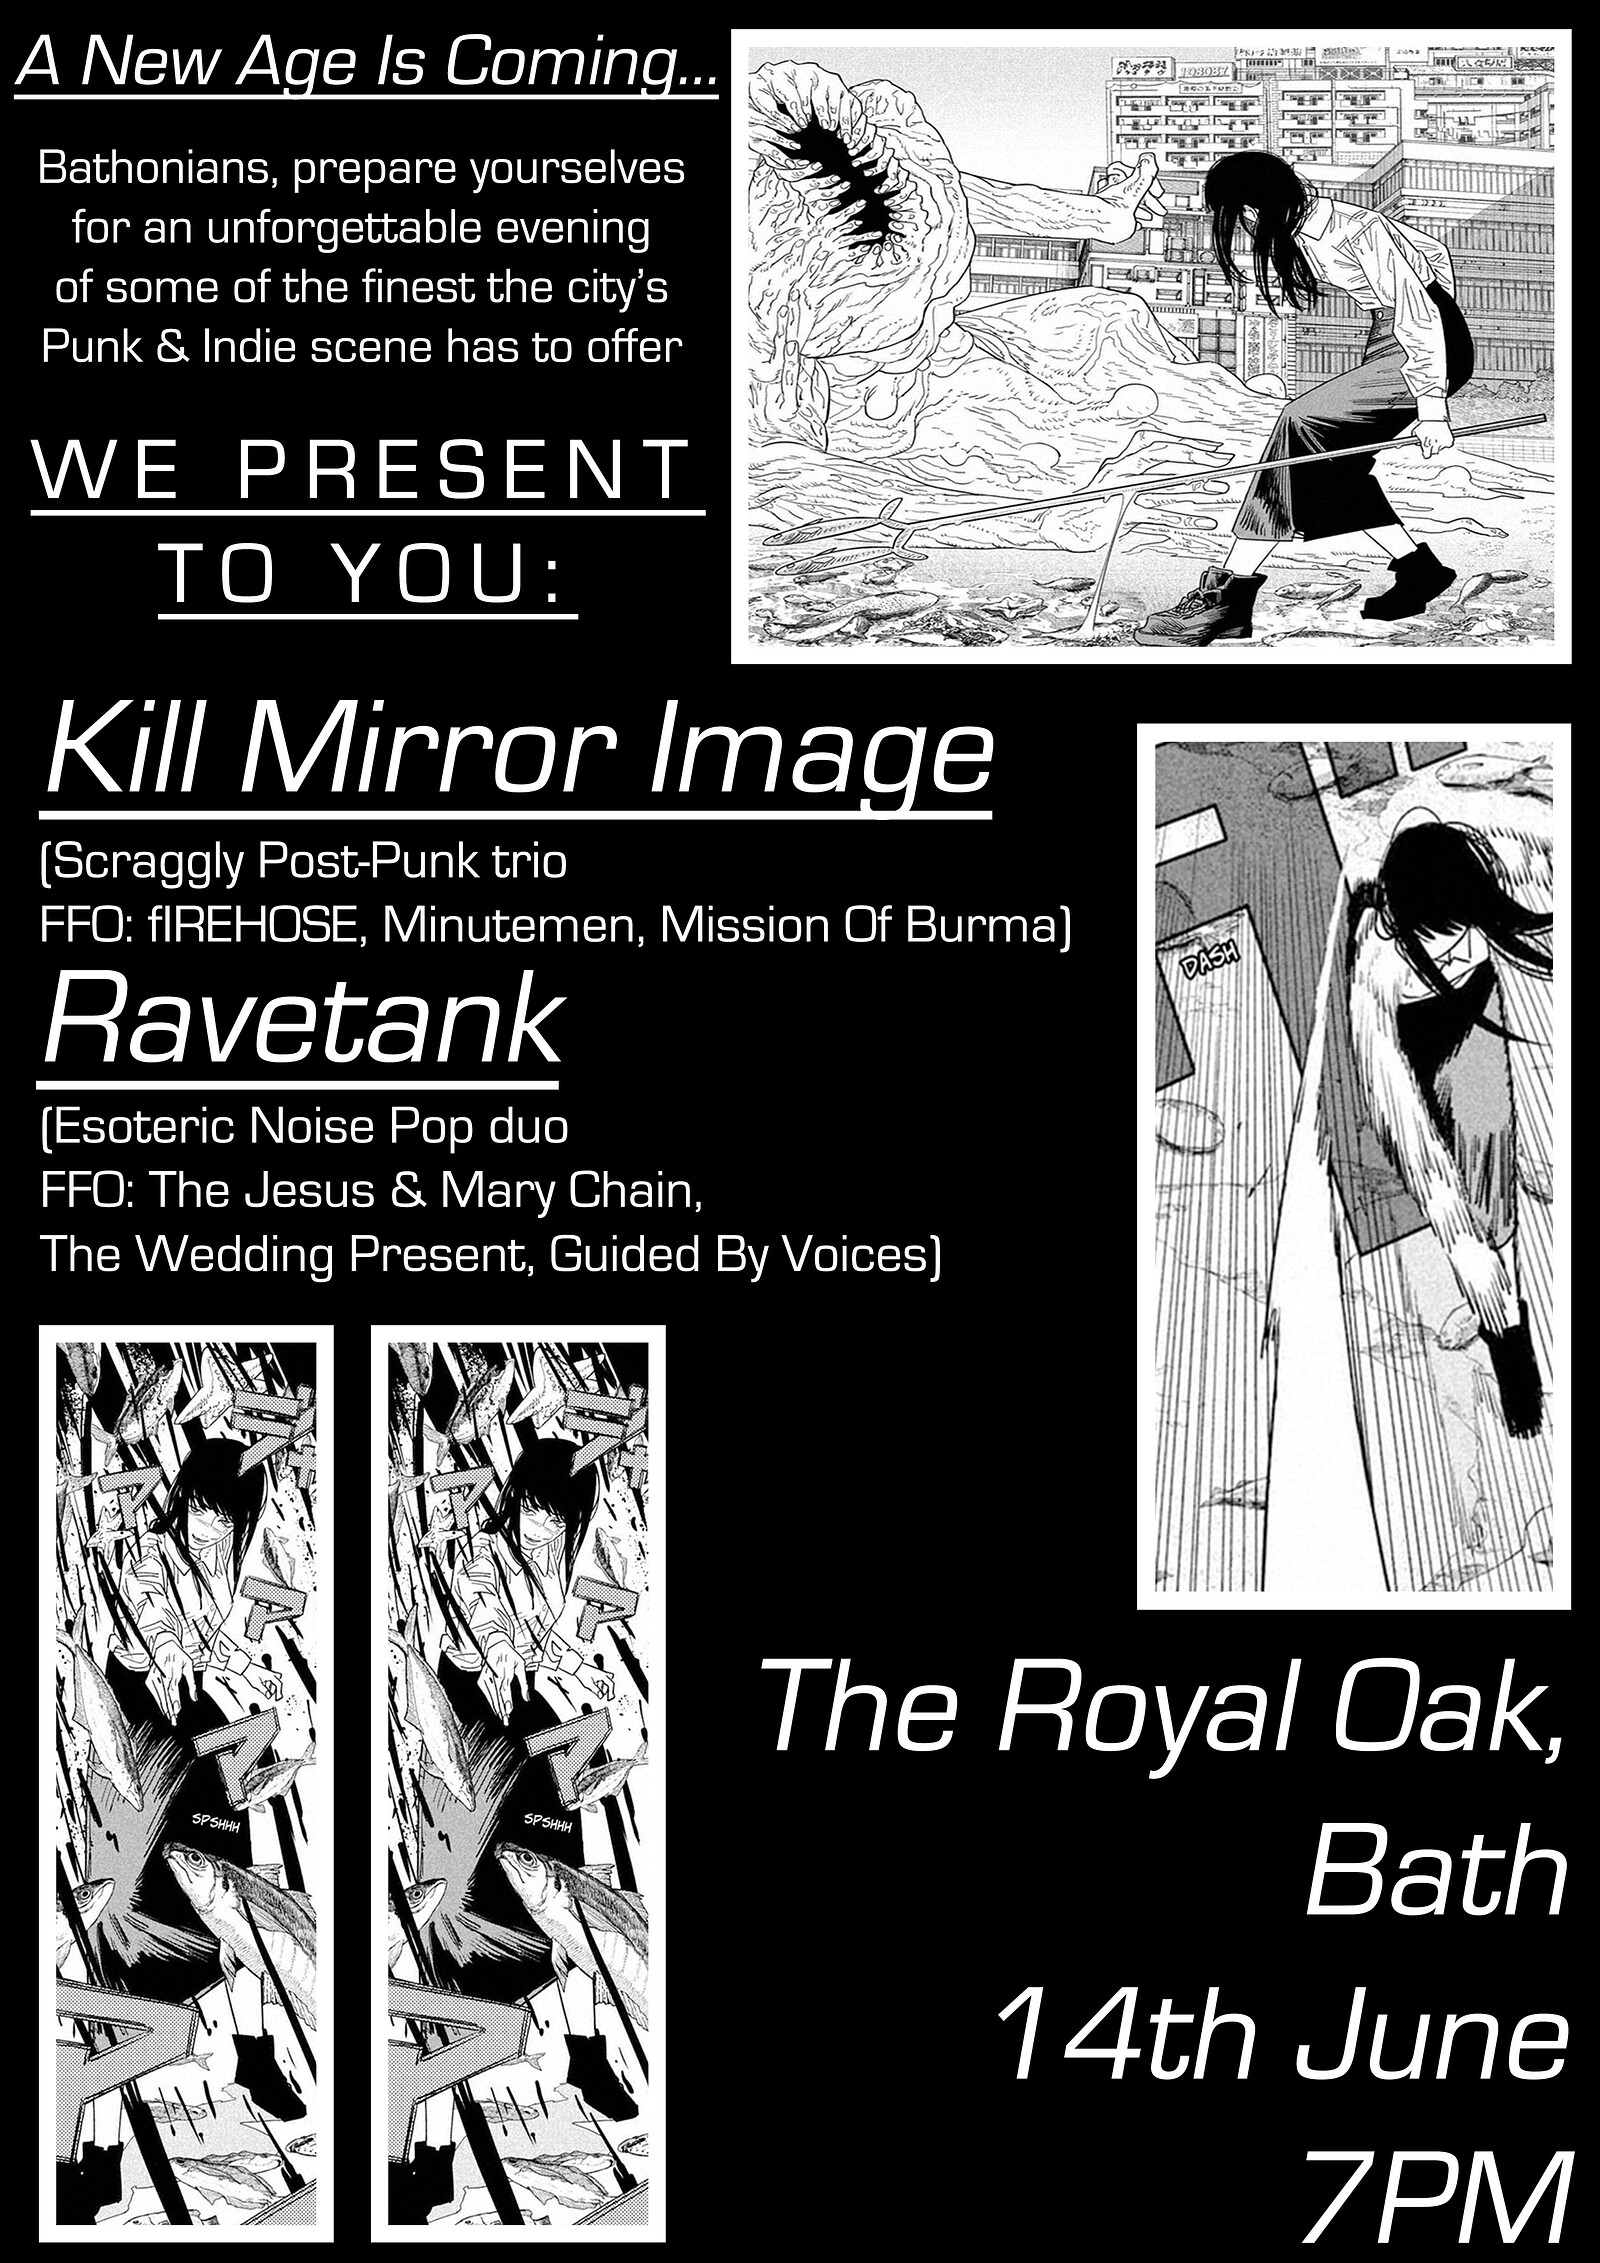 Kill Mirror Image + Ravetank at The Royal Oak Bath